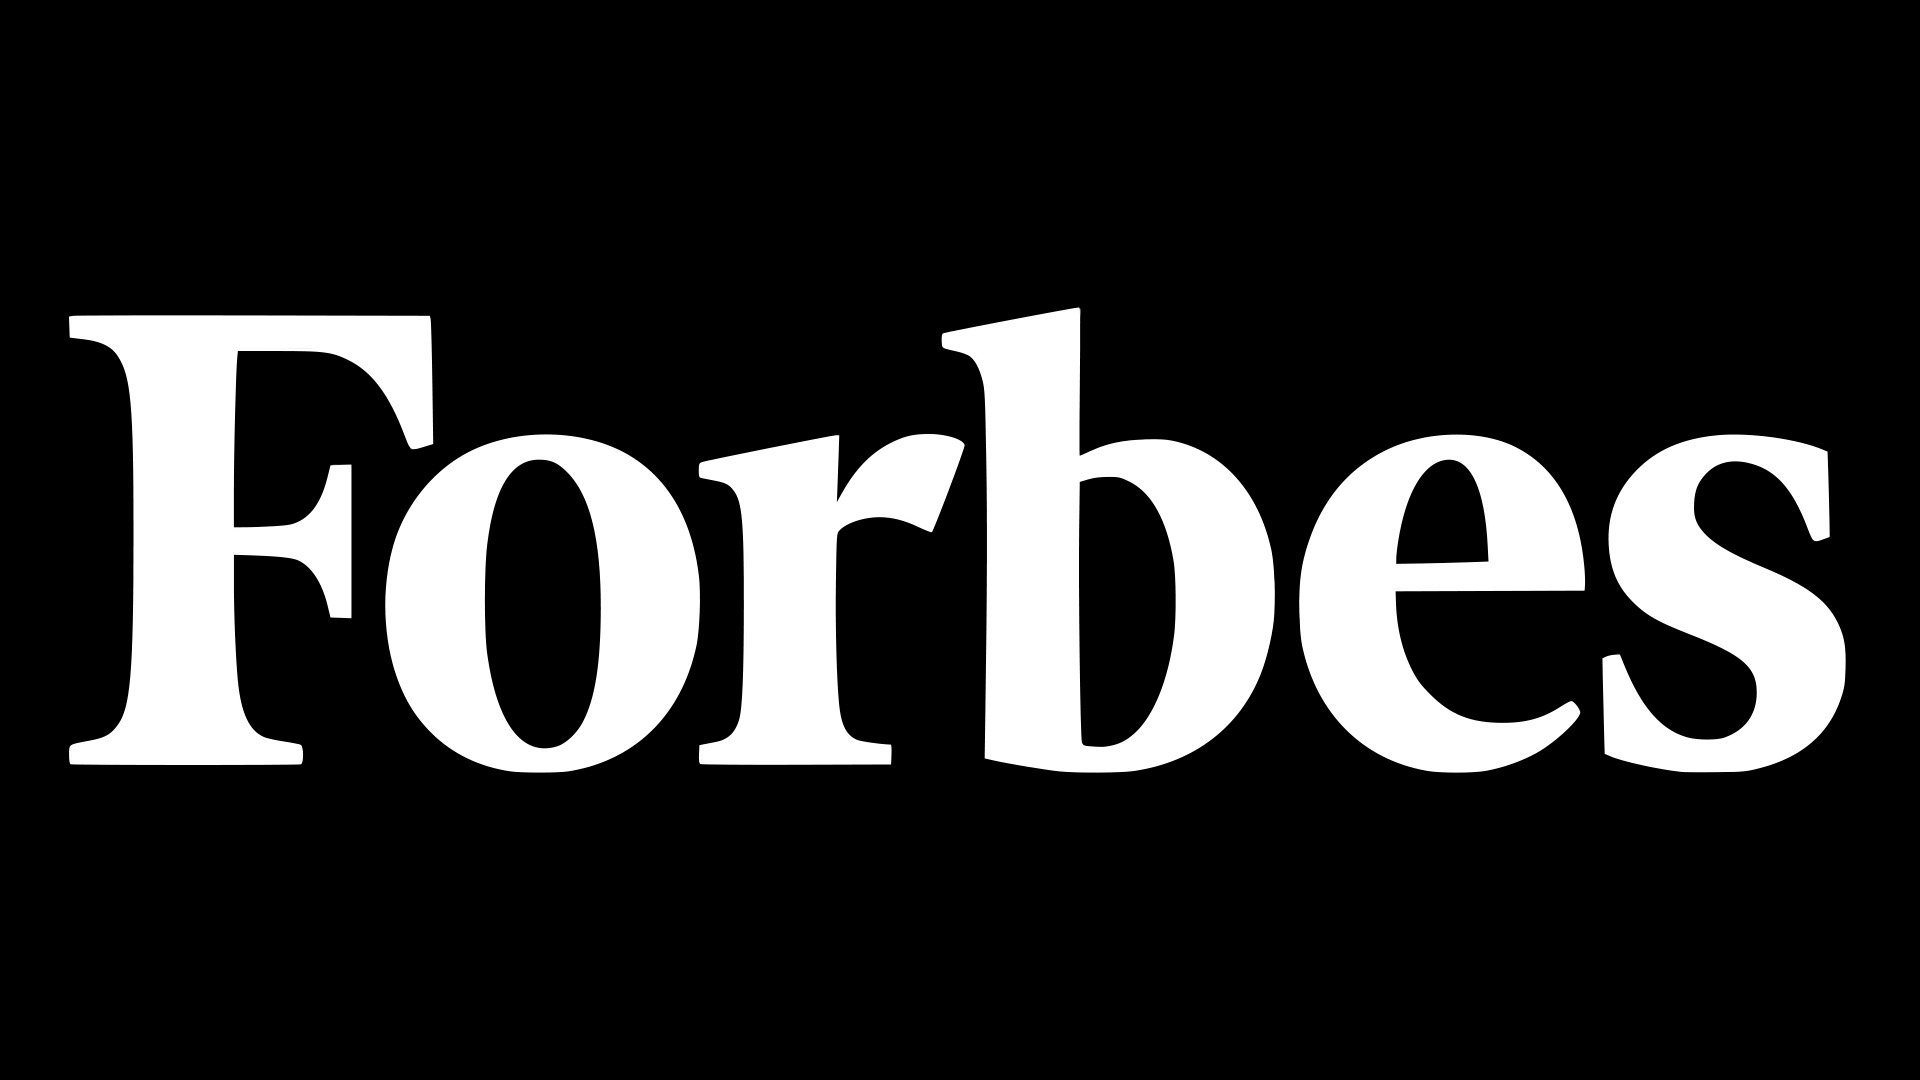 Forbes-emblem.jpg